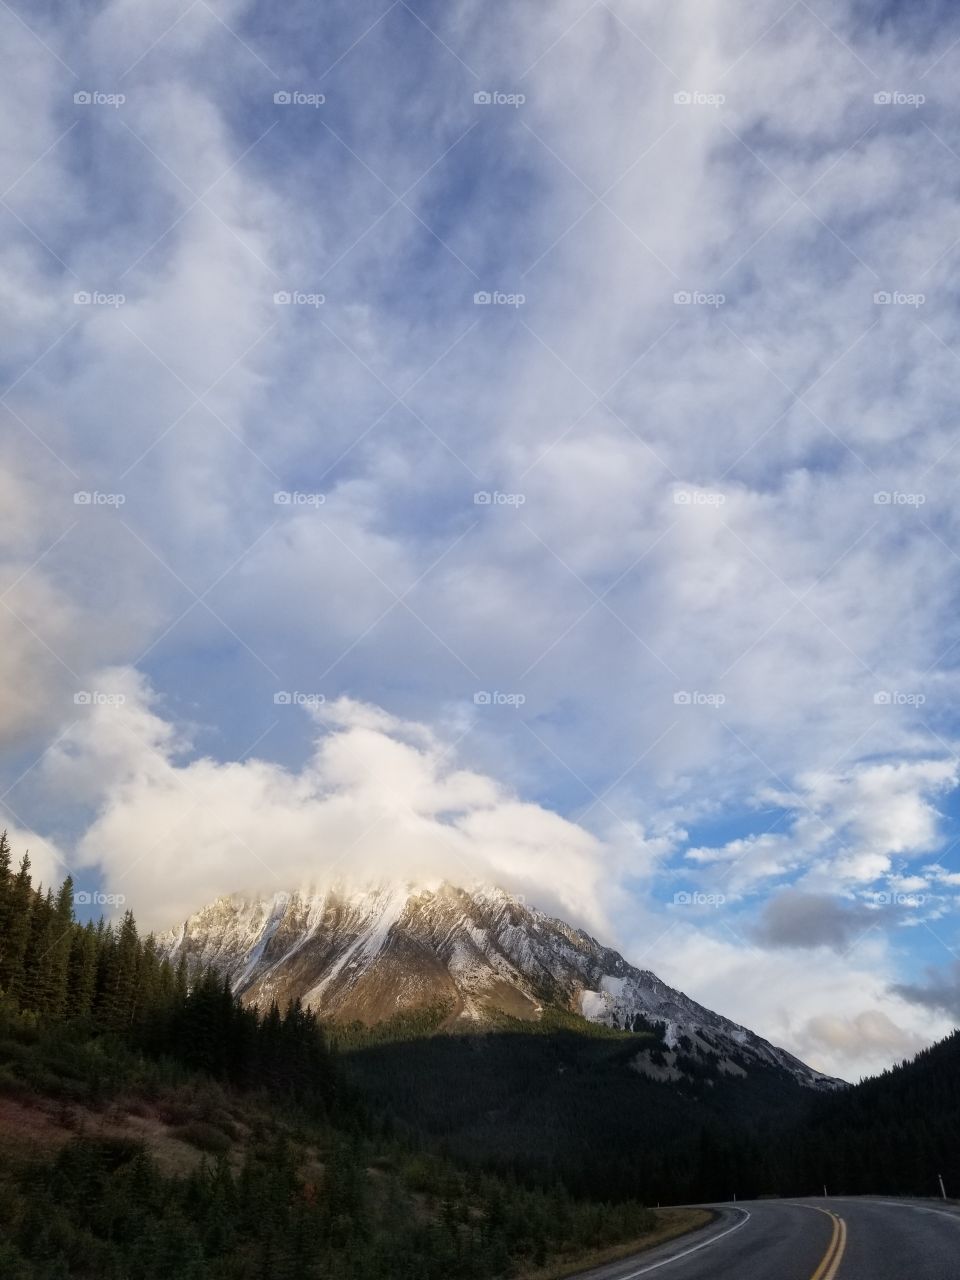 Mountains of Alberta, Canada